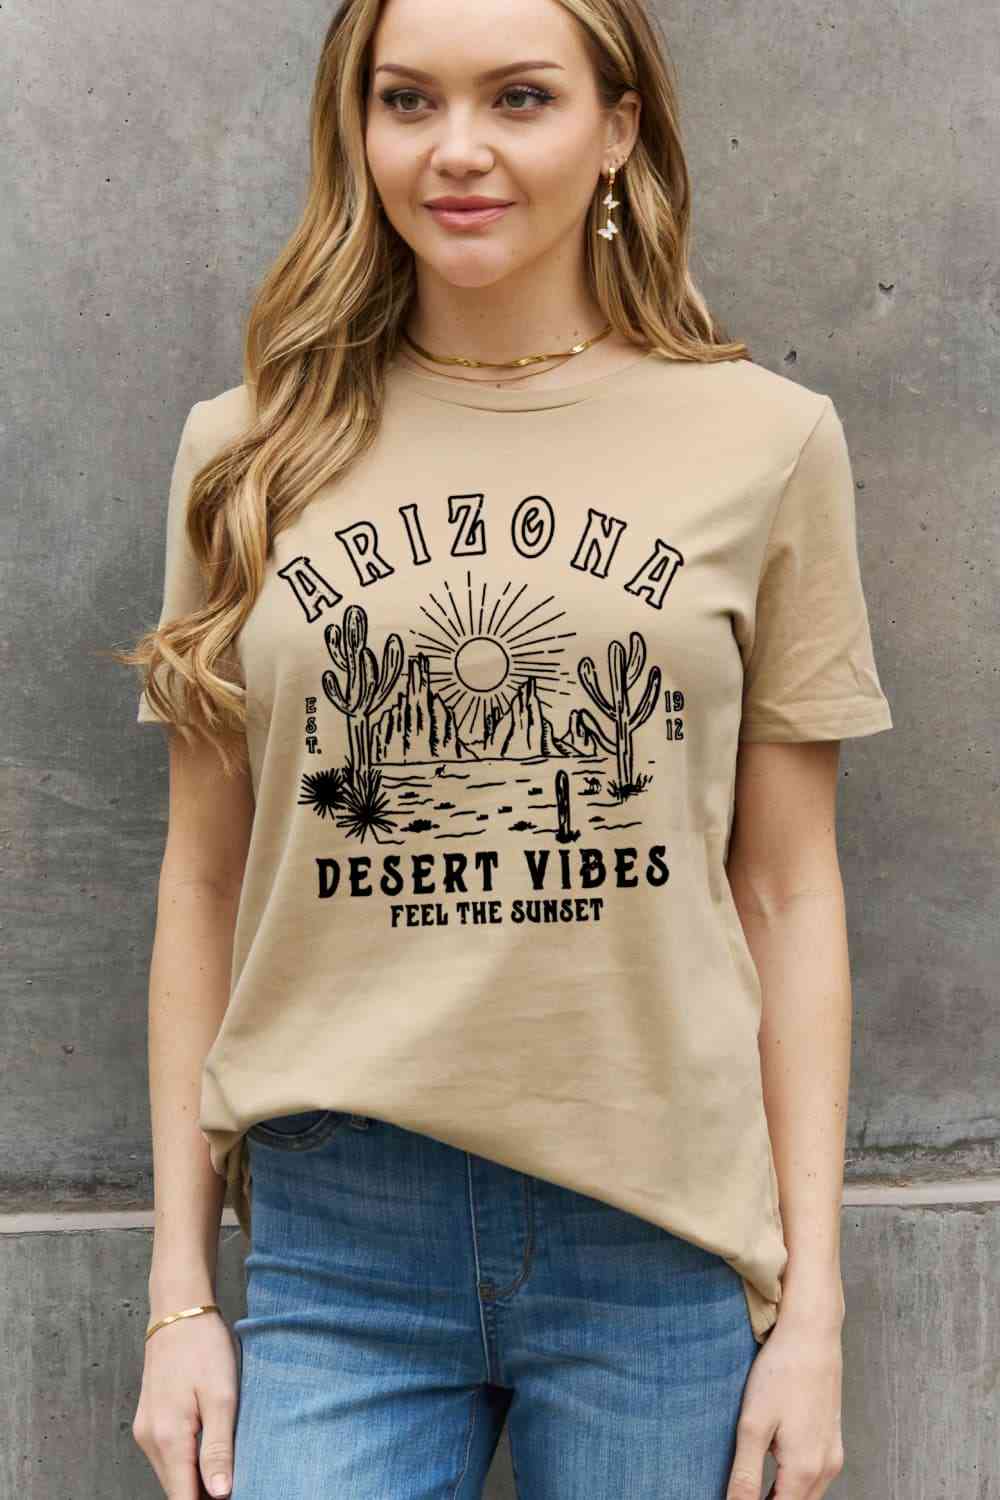 ARIZONA DESERT VIBES FEEL THE SUNSET Graphic Cotton Tee - T-Shirts - Shirts & Tops - 5 - 2024